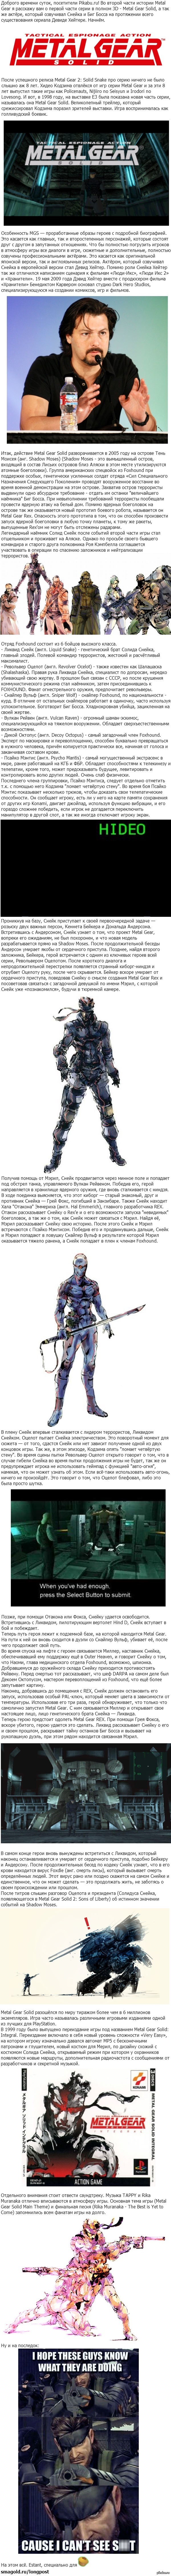  Metal Gear.  2:   3D   - <a href="http://pikabu.ru/story/istoriya_metal_gear_chast_1_nachalo_2507432">http://pikabu.ru/story/_2507432</a>